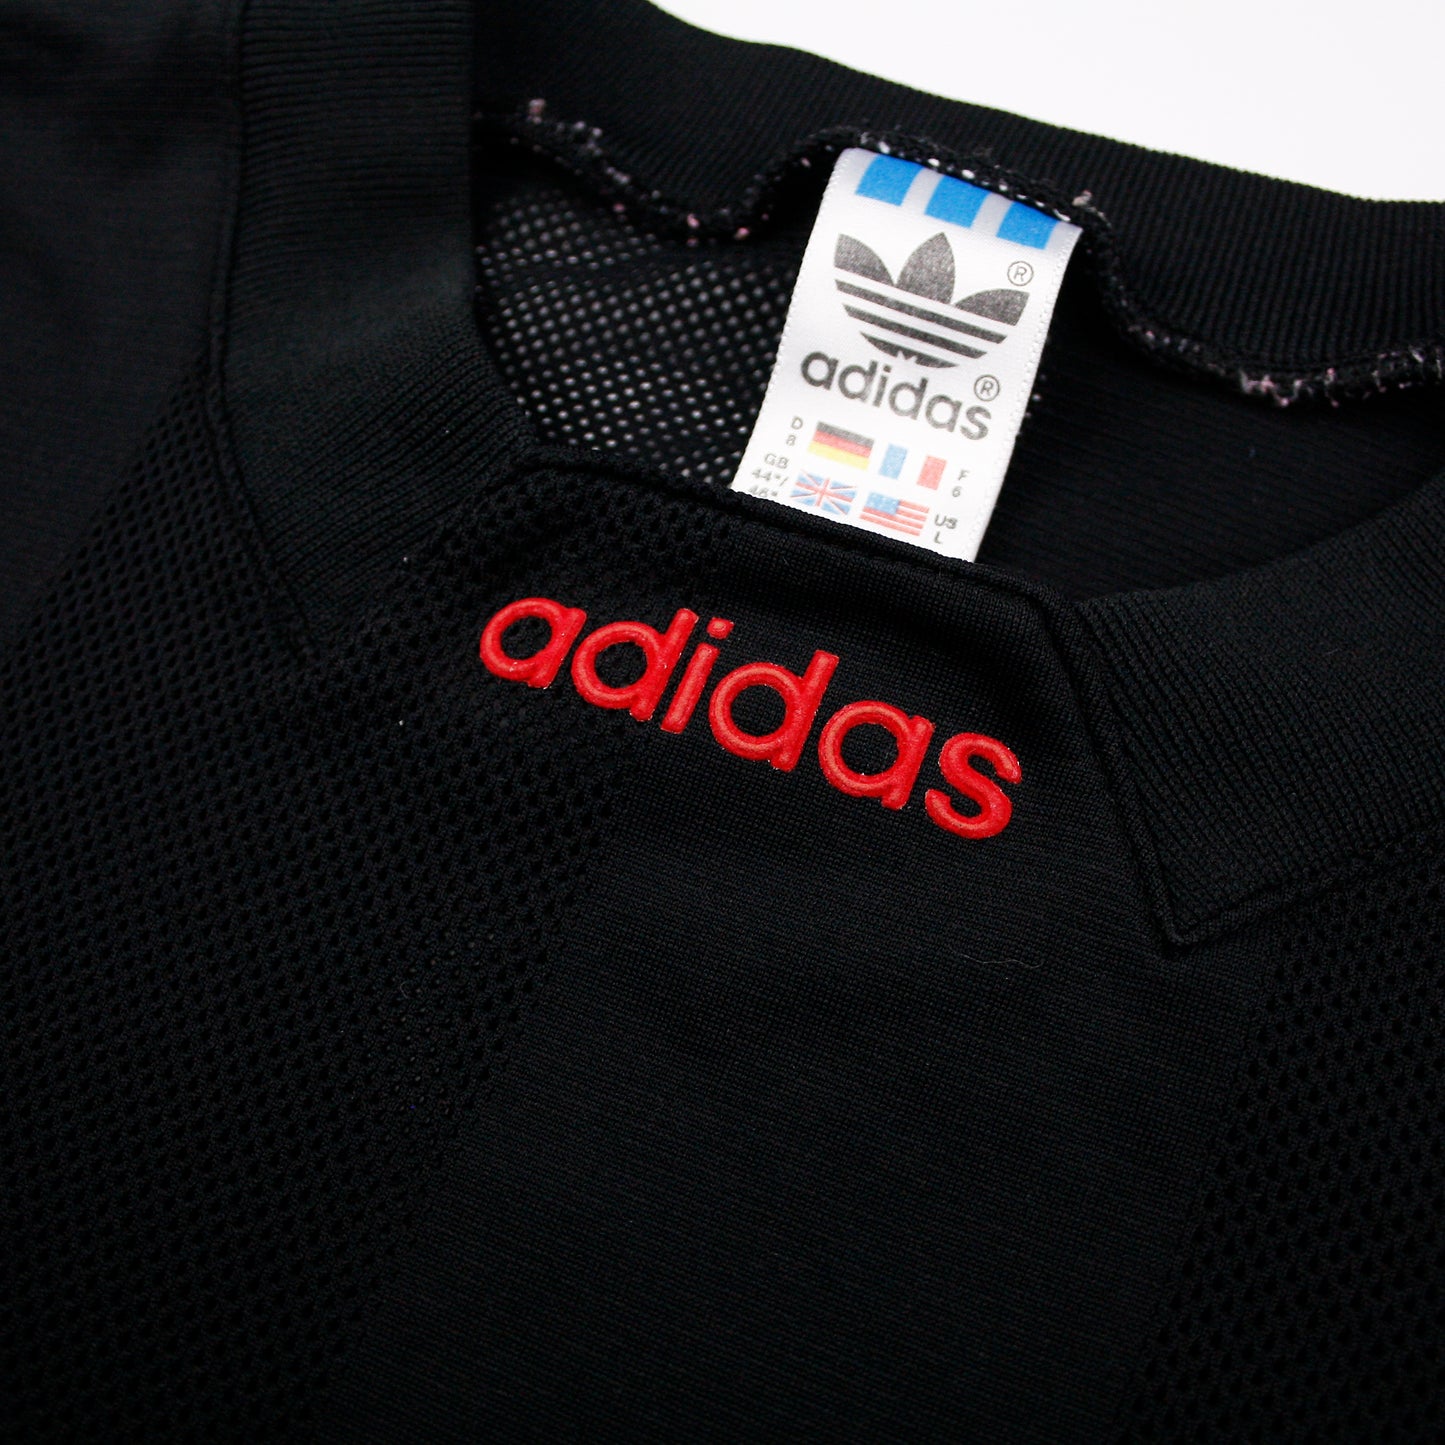 Adidas 90s • Training Shirt • L/XL